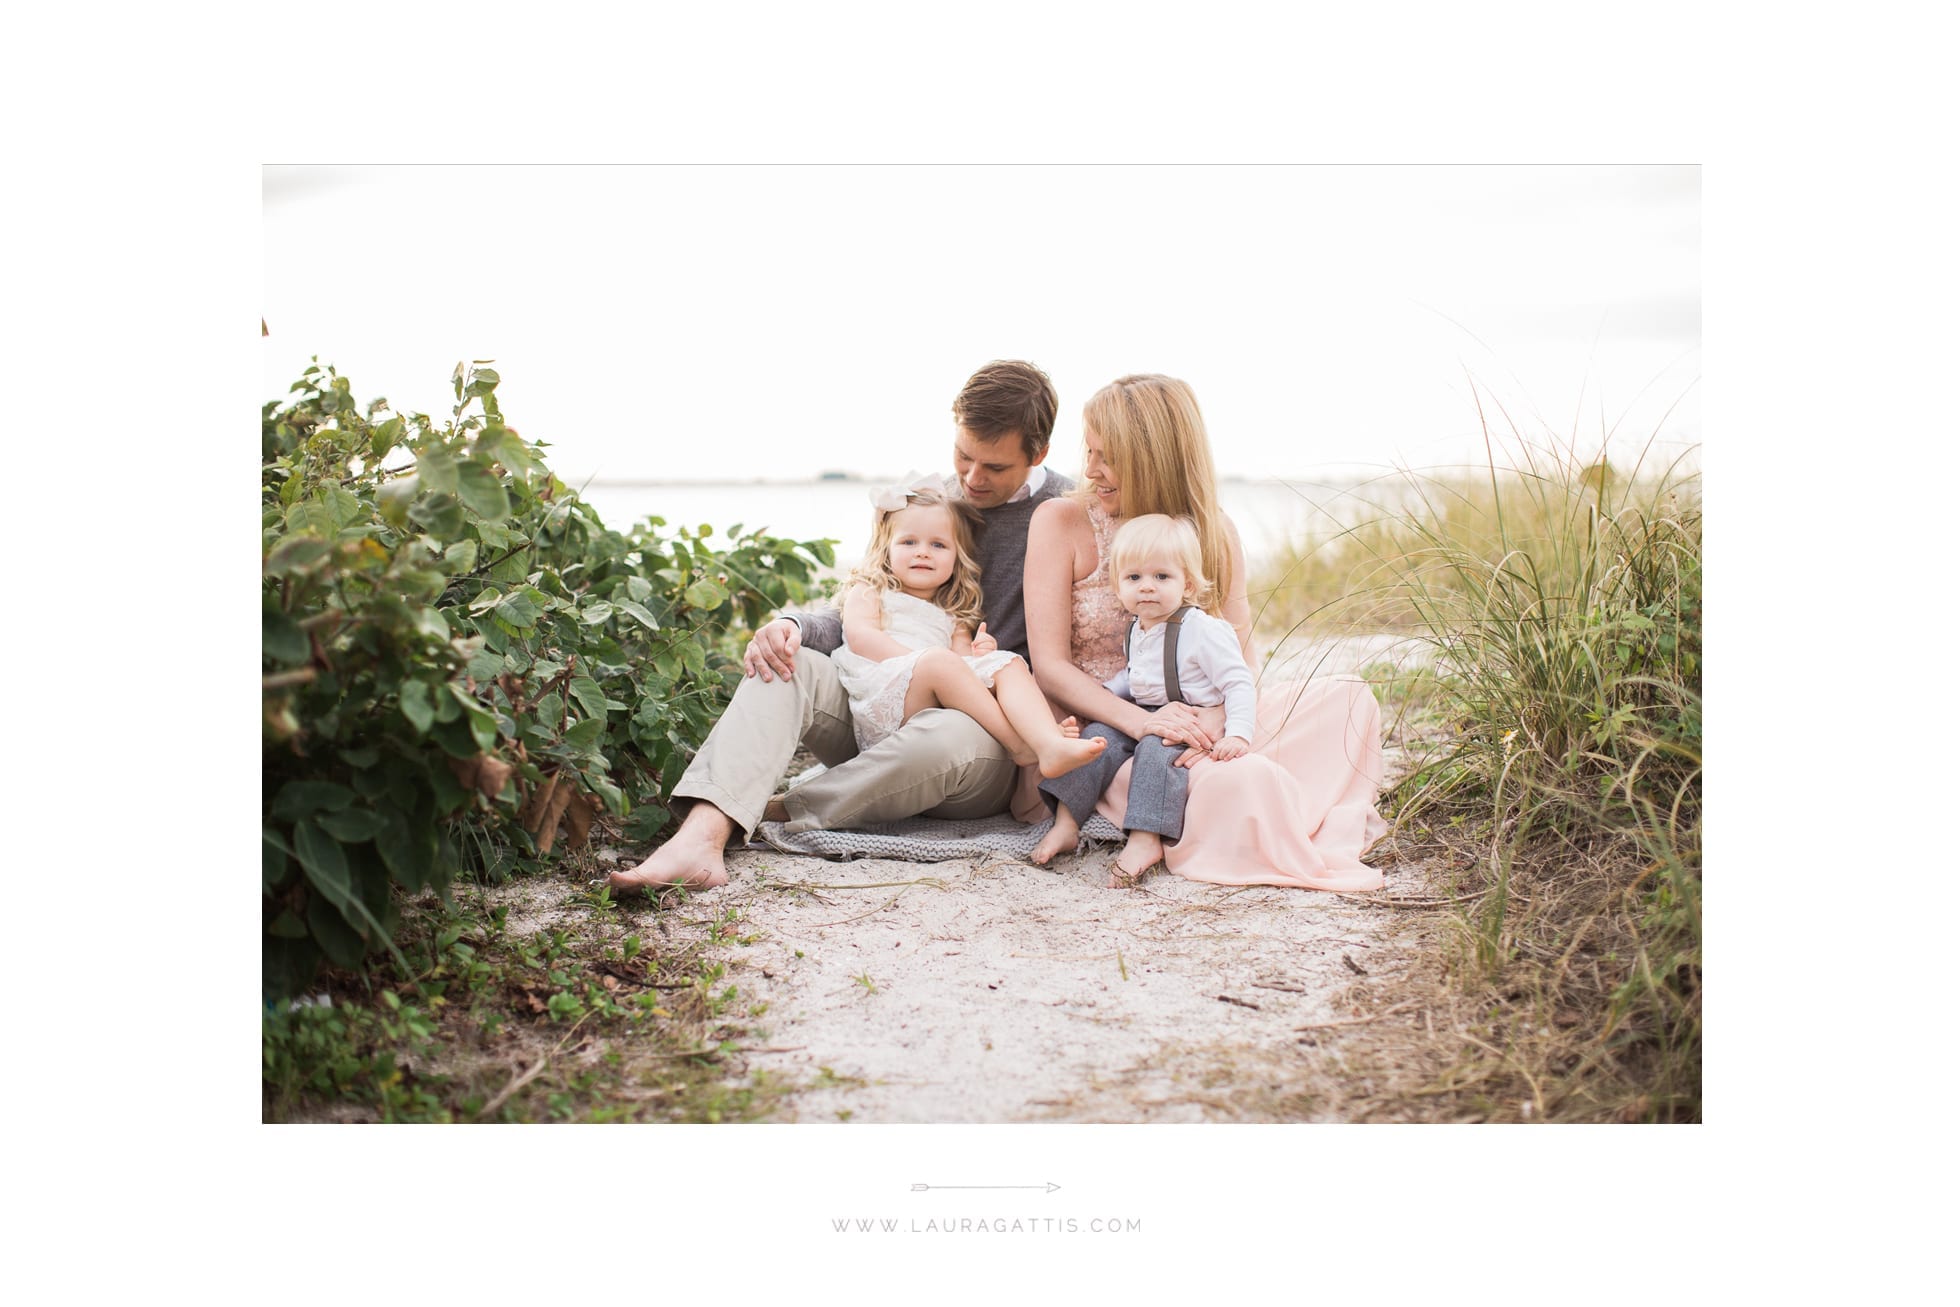 family beach session | laura gattis photography